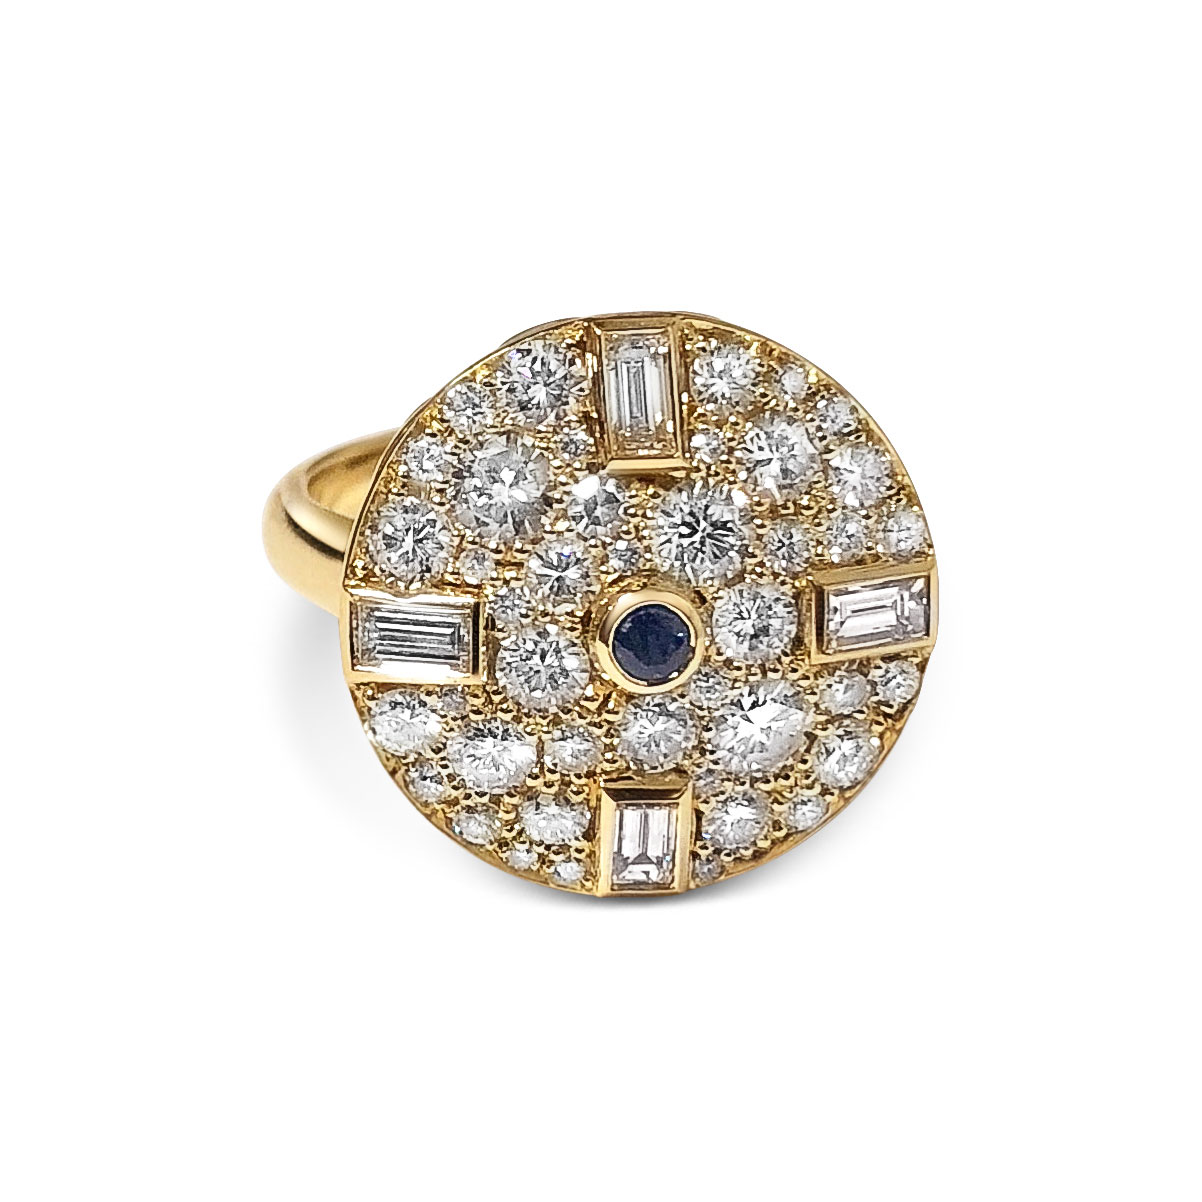 Bespoke sapphire, baguette-cut diamond and pavé-set diamond circular ring, mounted in 18ct yellow gold. top